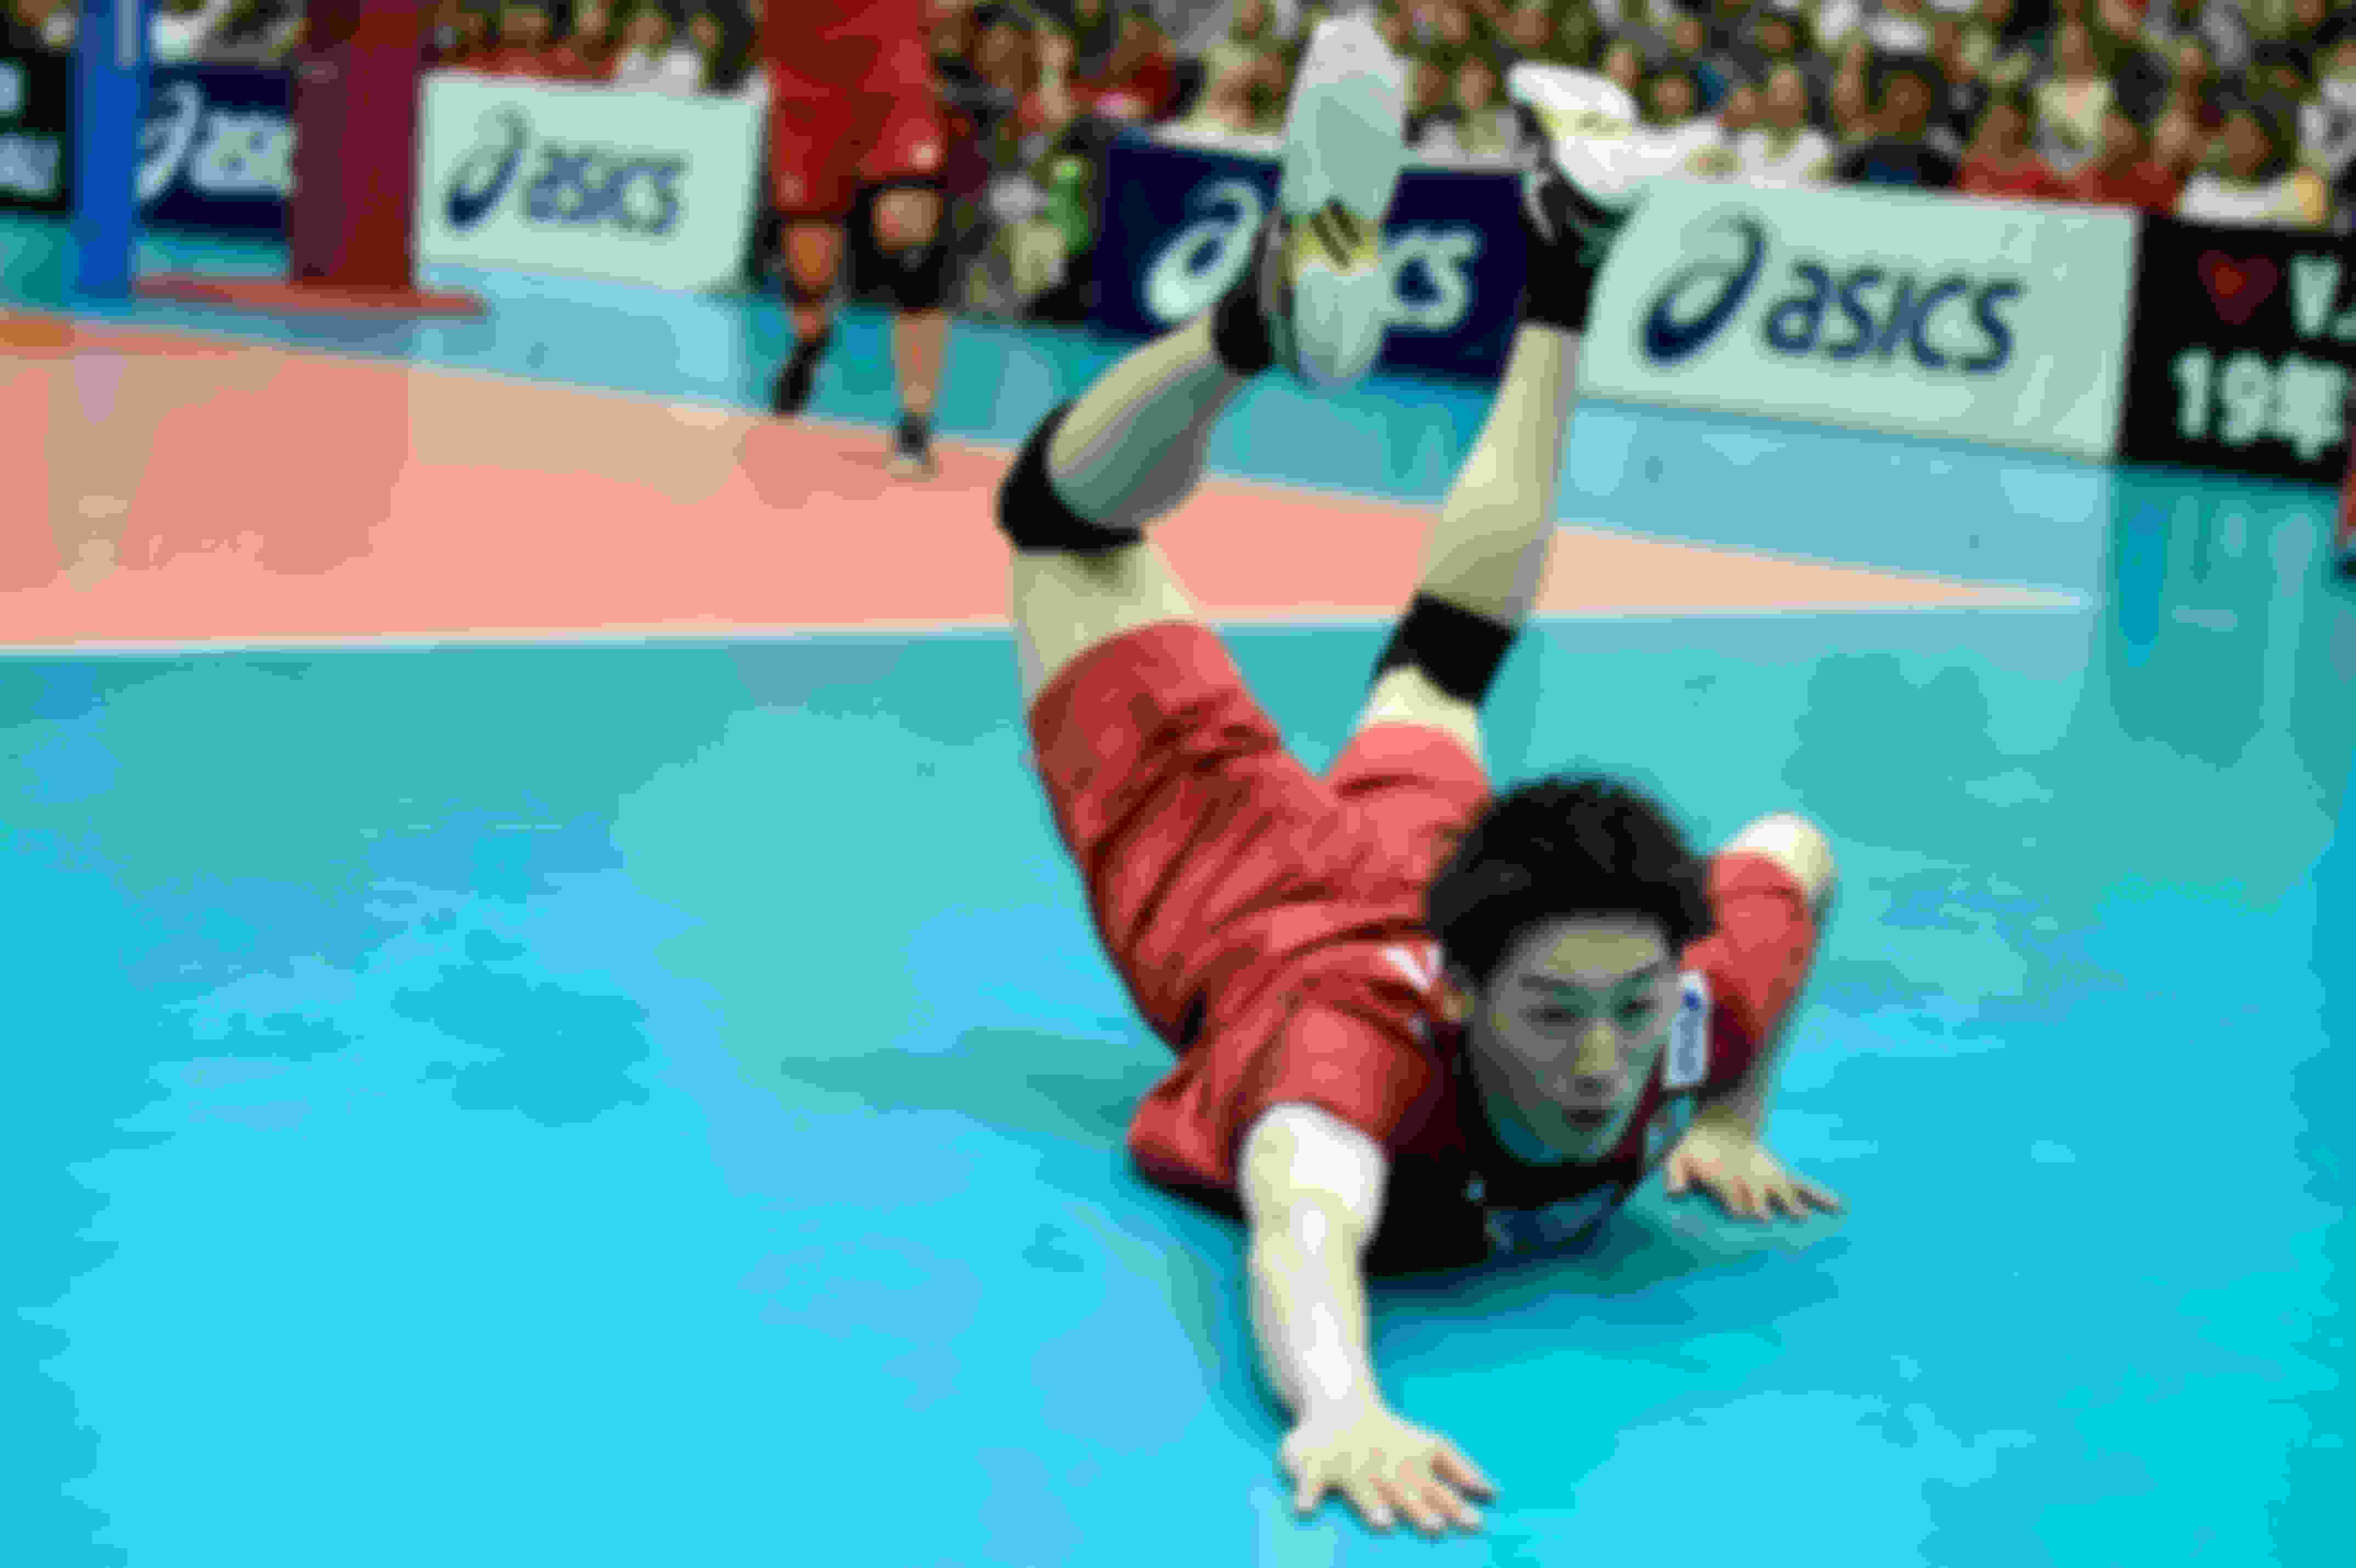 Ishikawa Yuki is eyeing Japan's first men's volleyball medal since Munich 1972.